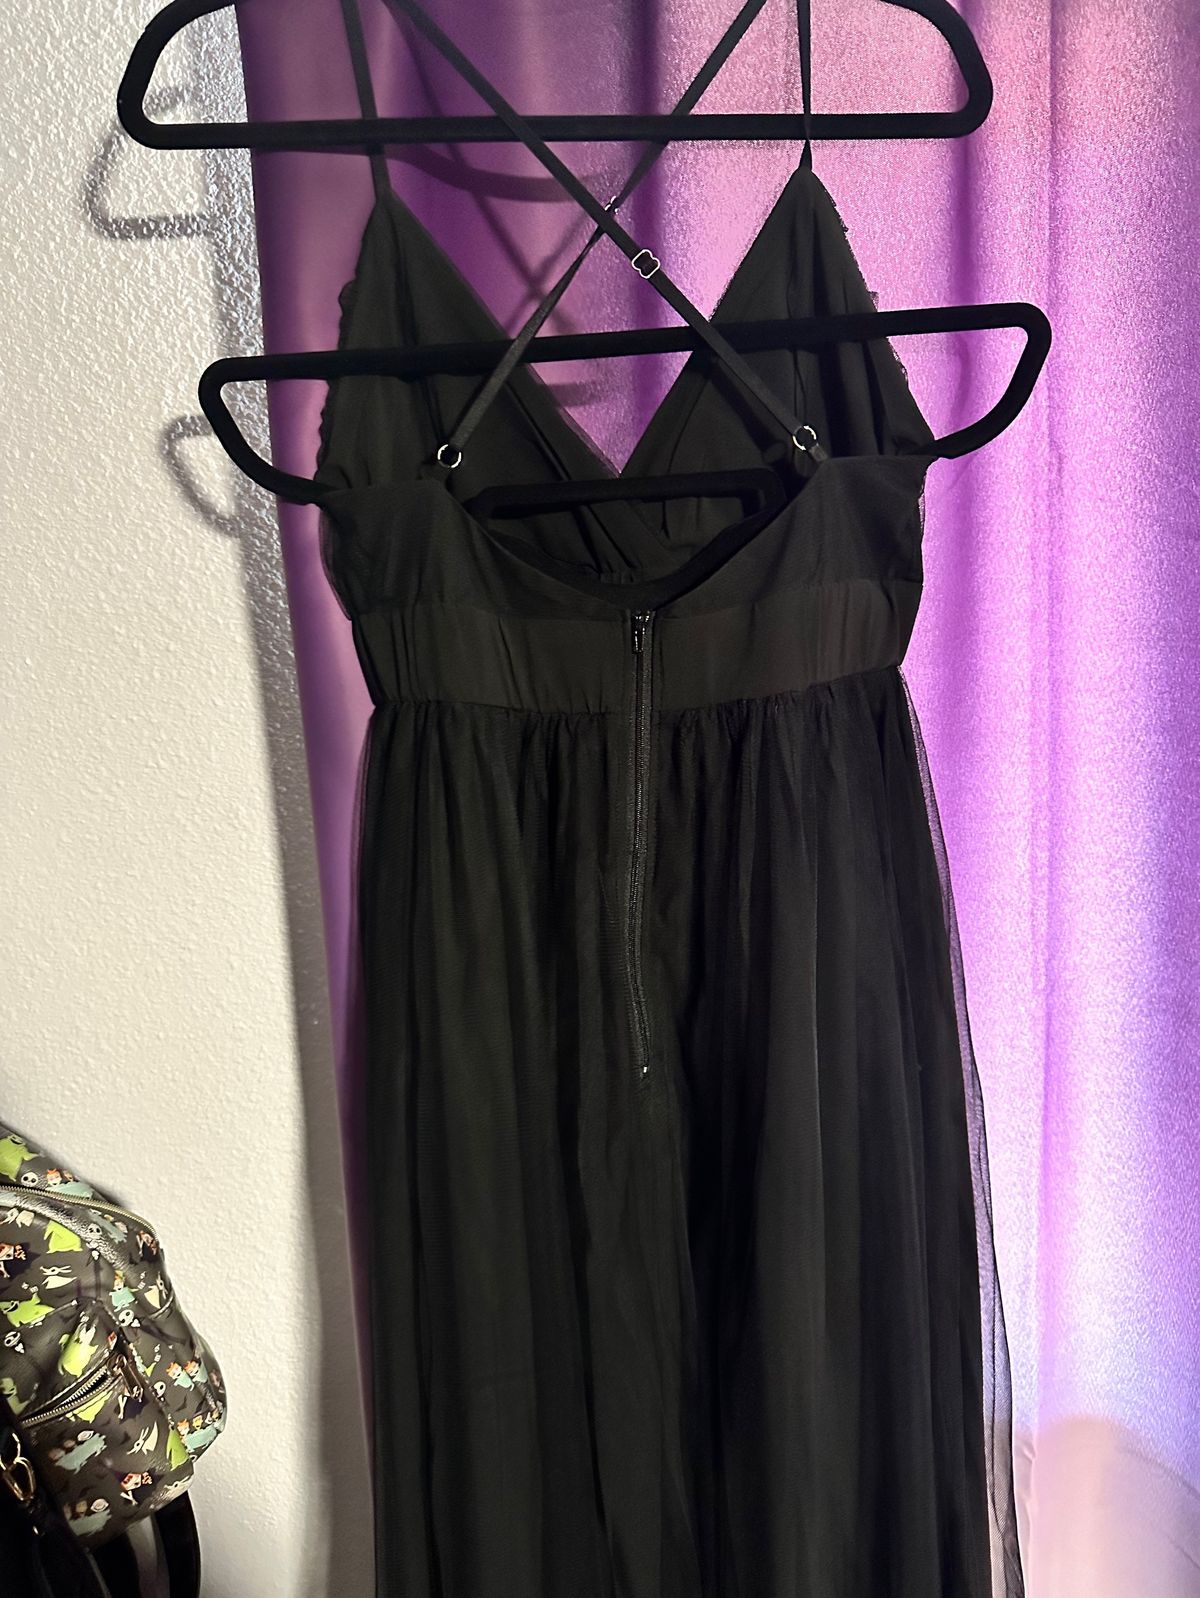 Size S Prom Plunge Black Side Slit Dress on Queenly